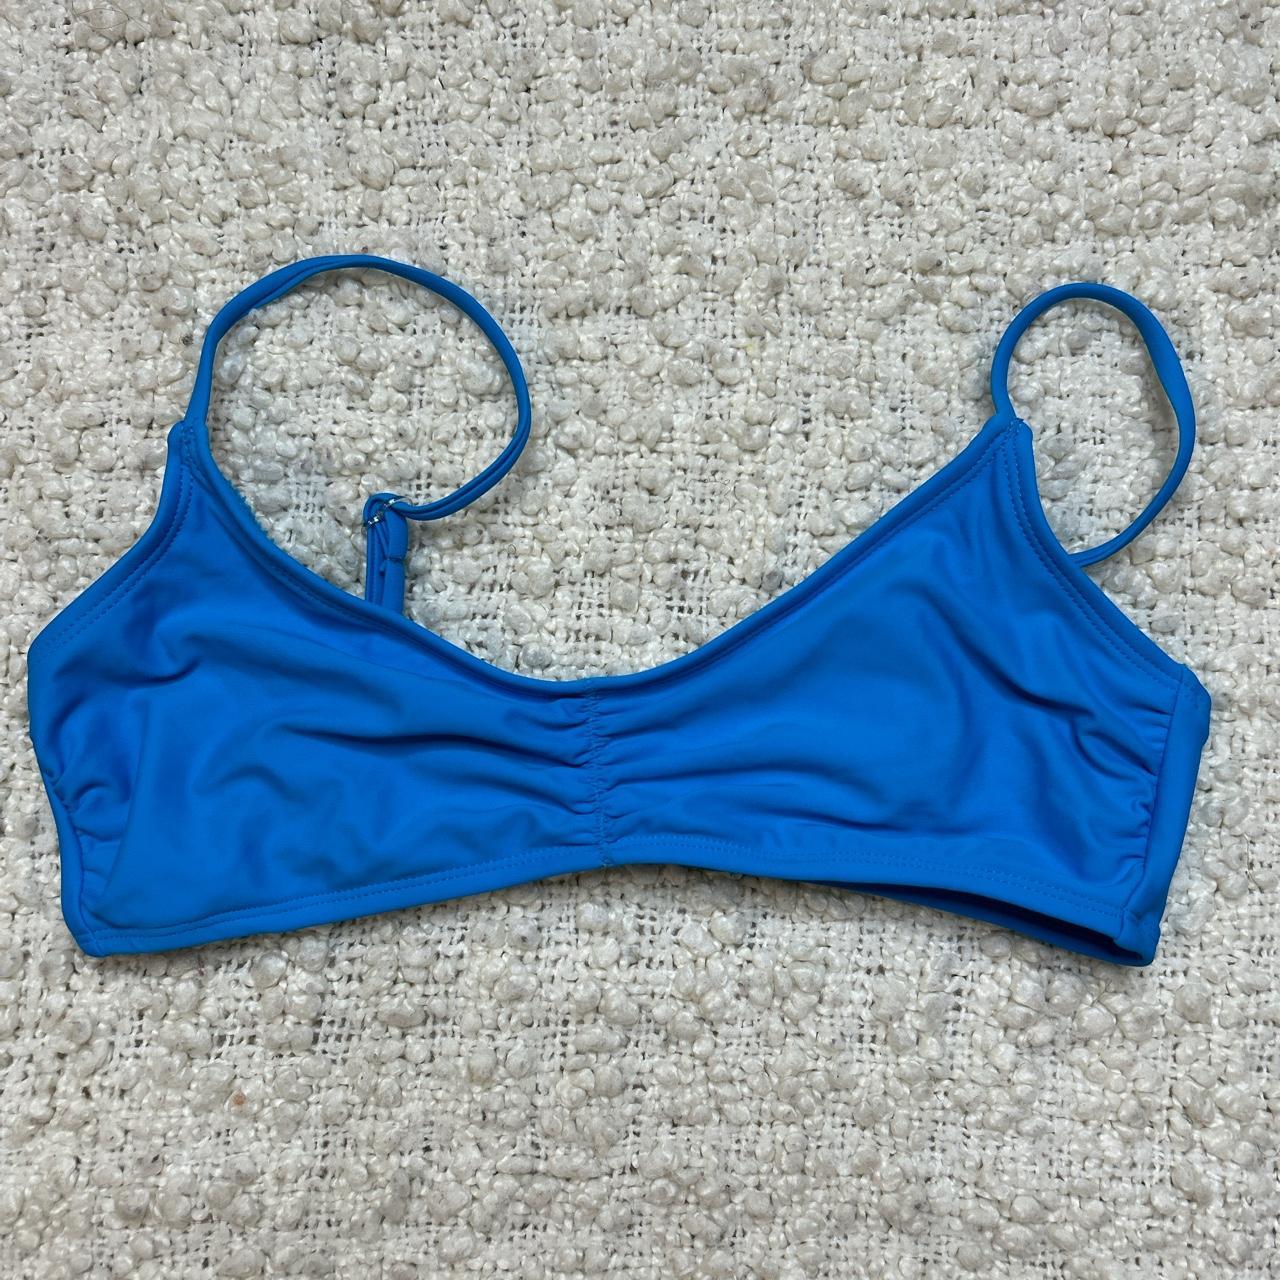 Blue bikini top #cyan#blue#bikini#summer - Depop